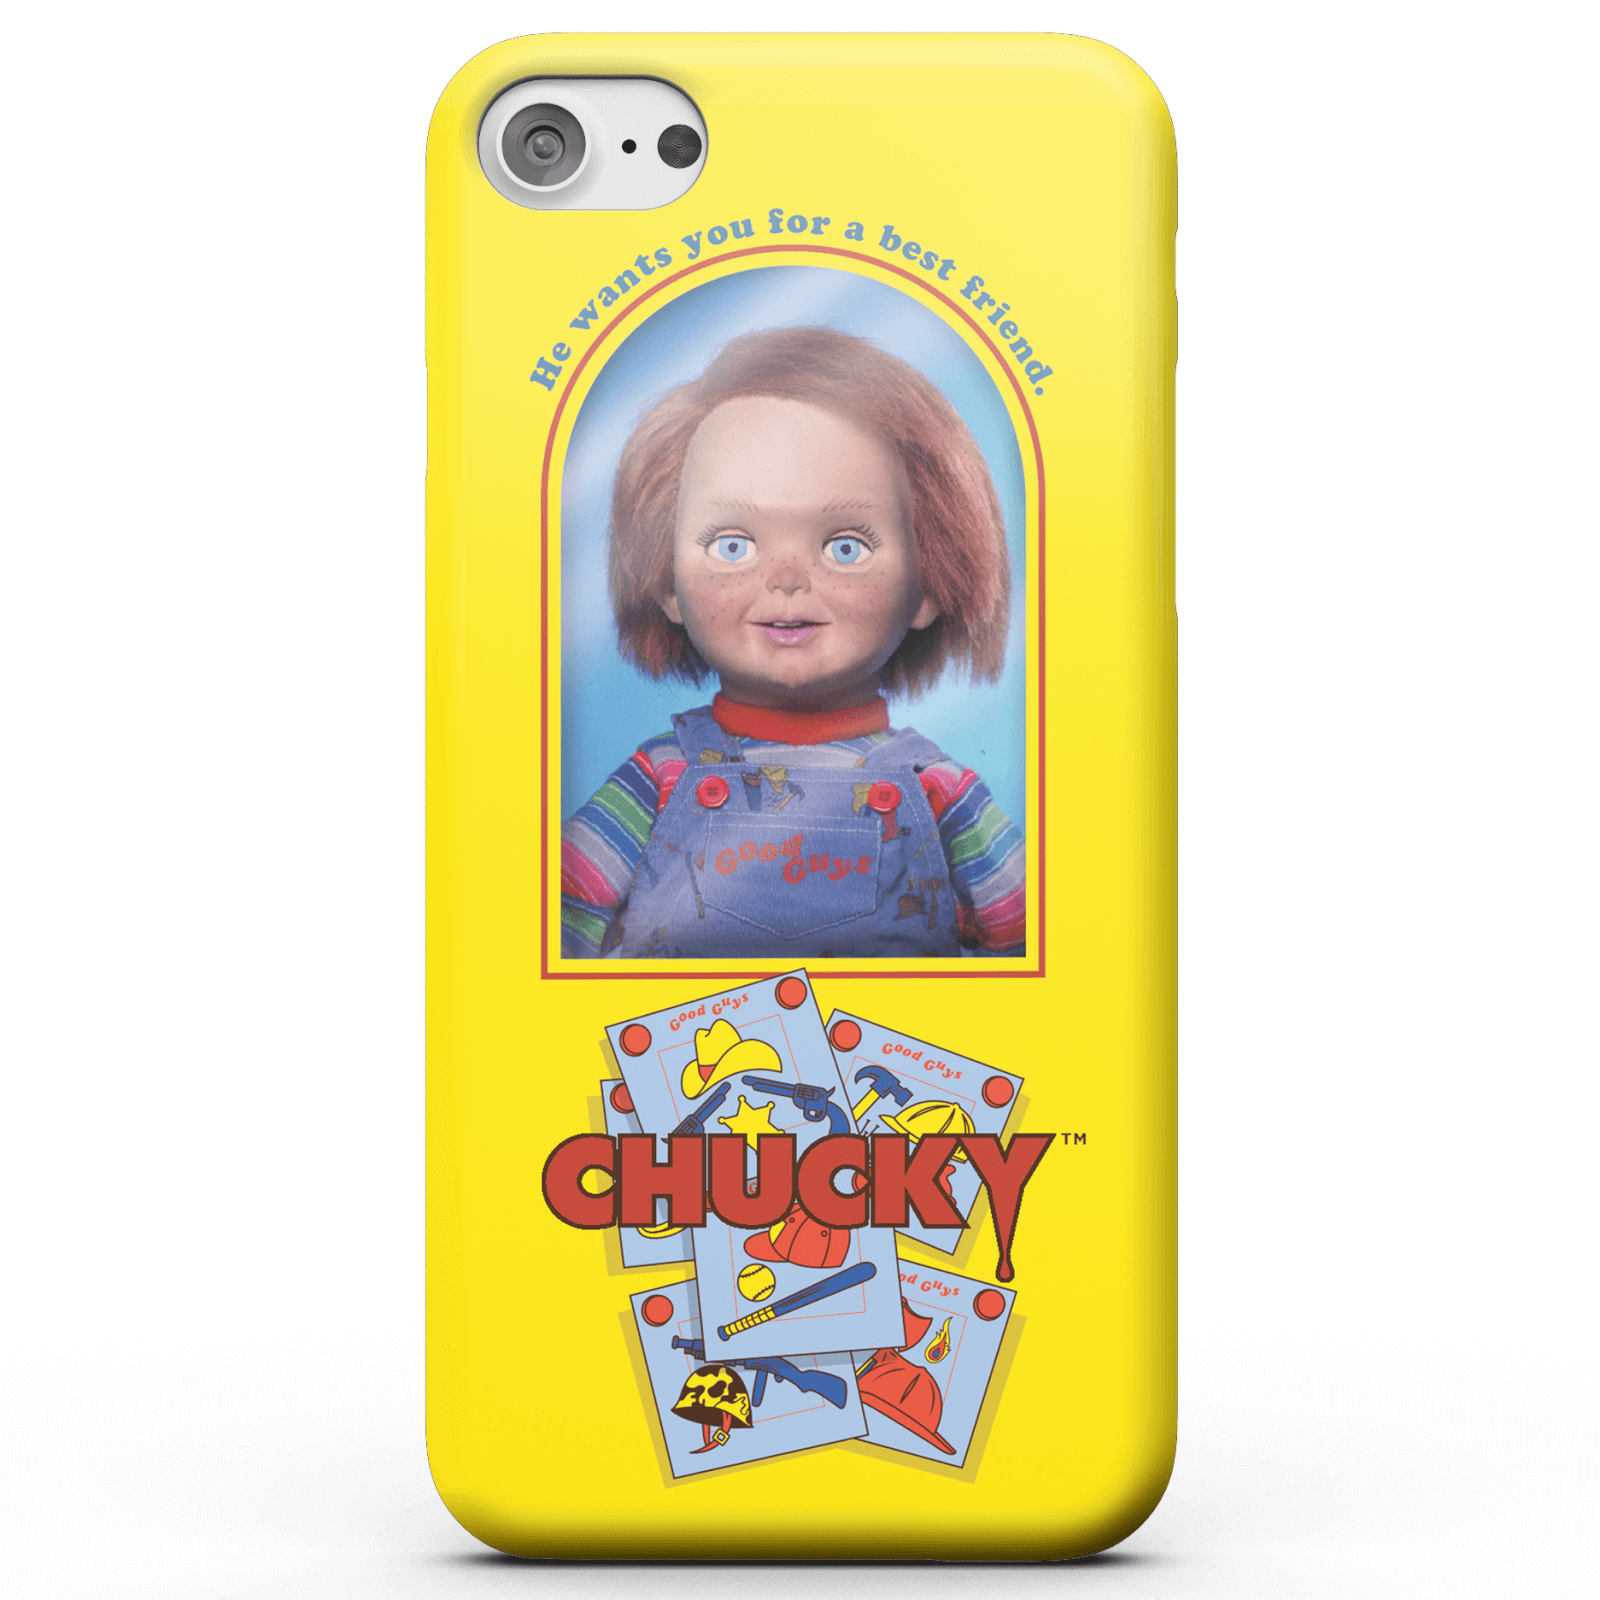 Funda Móvil Chucky Good Guys Doll para iPhone y Android - iPhone 6S - Carcasa doble capa - Mate